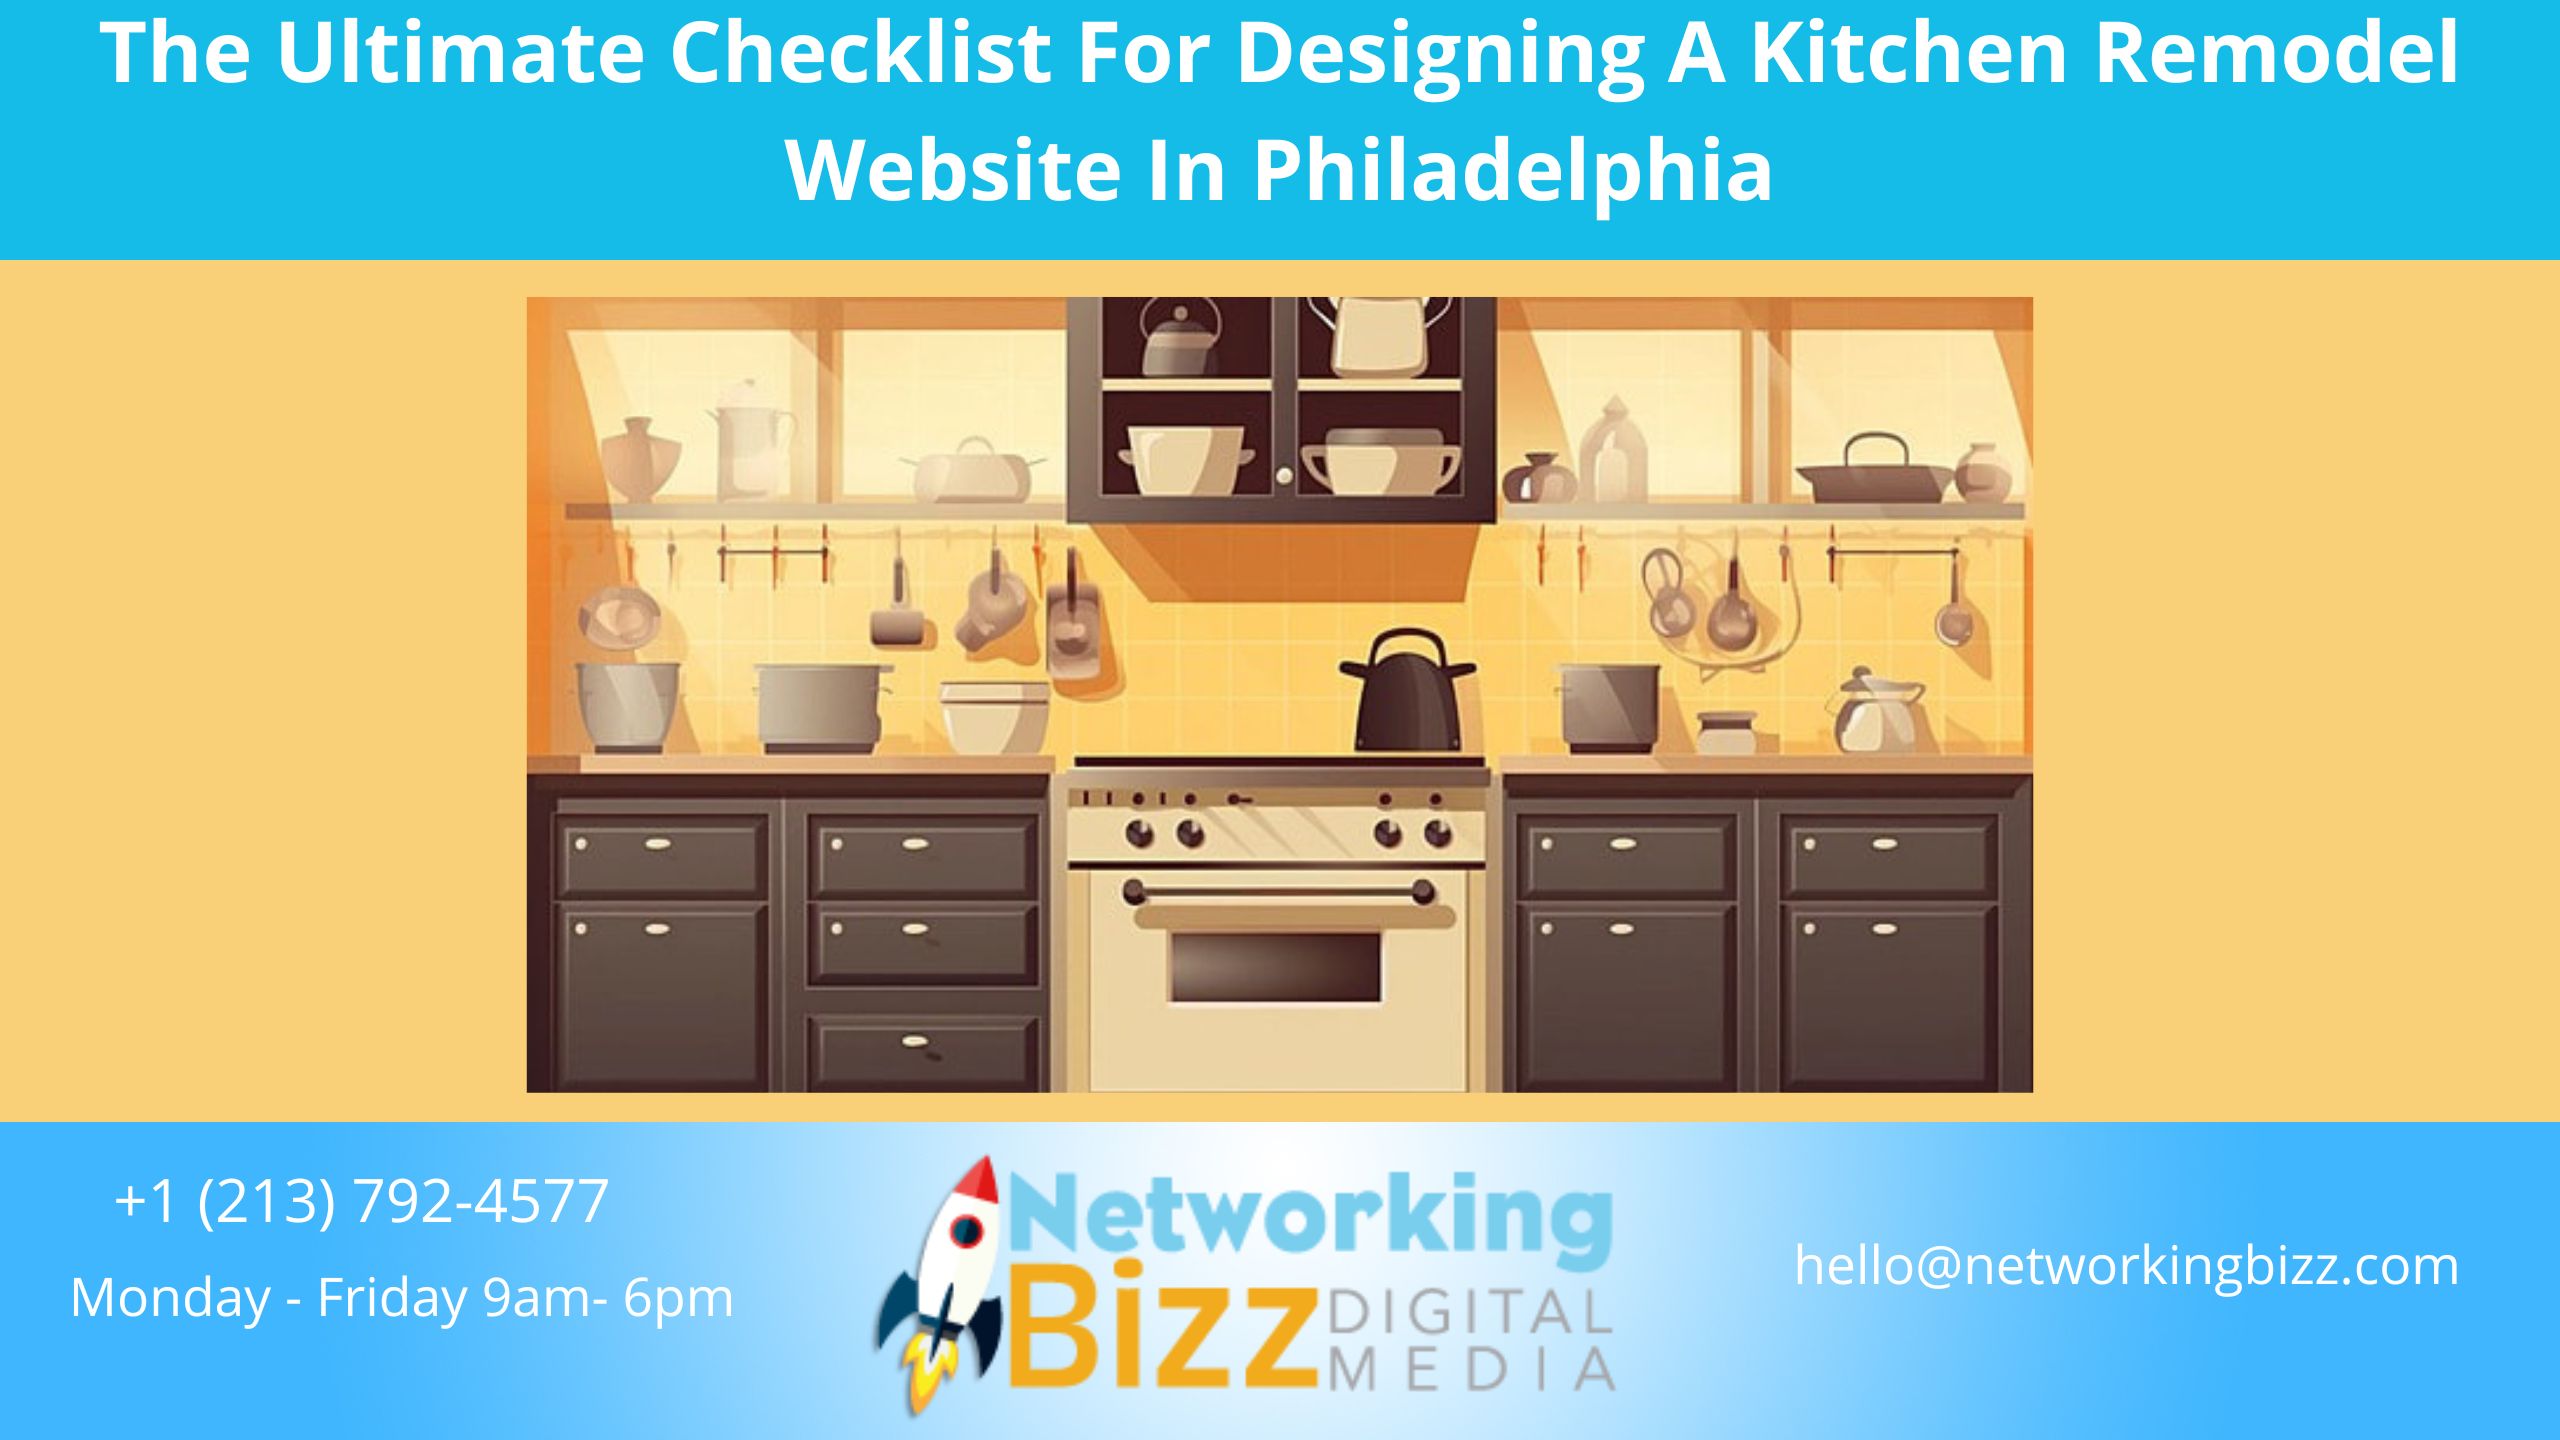 The Ultimate Checklist For Designing A Kitchen Remodel Website In Philadelphia